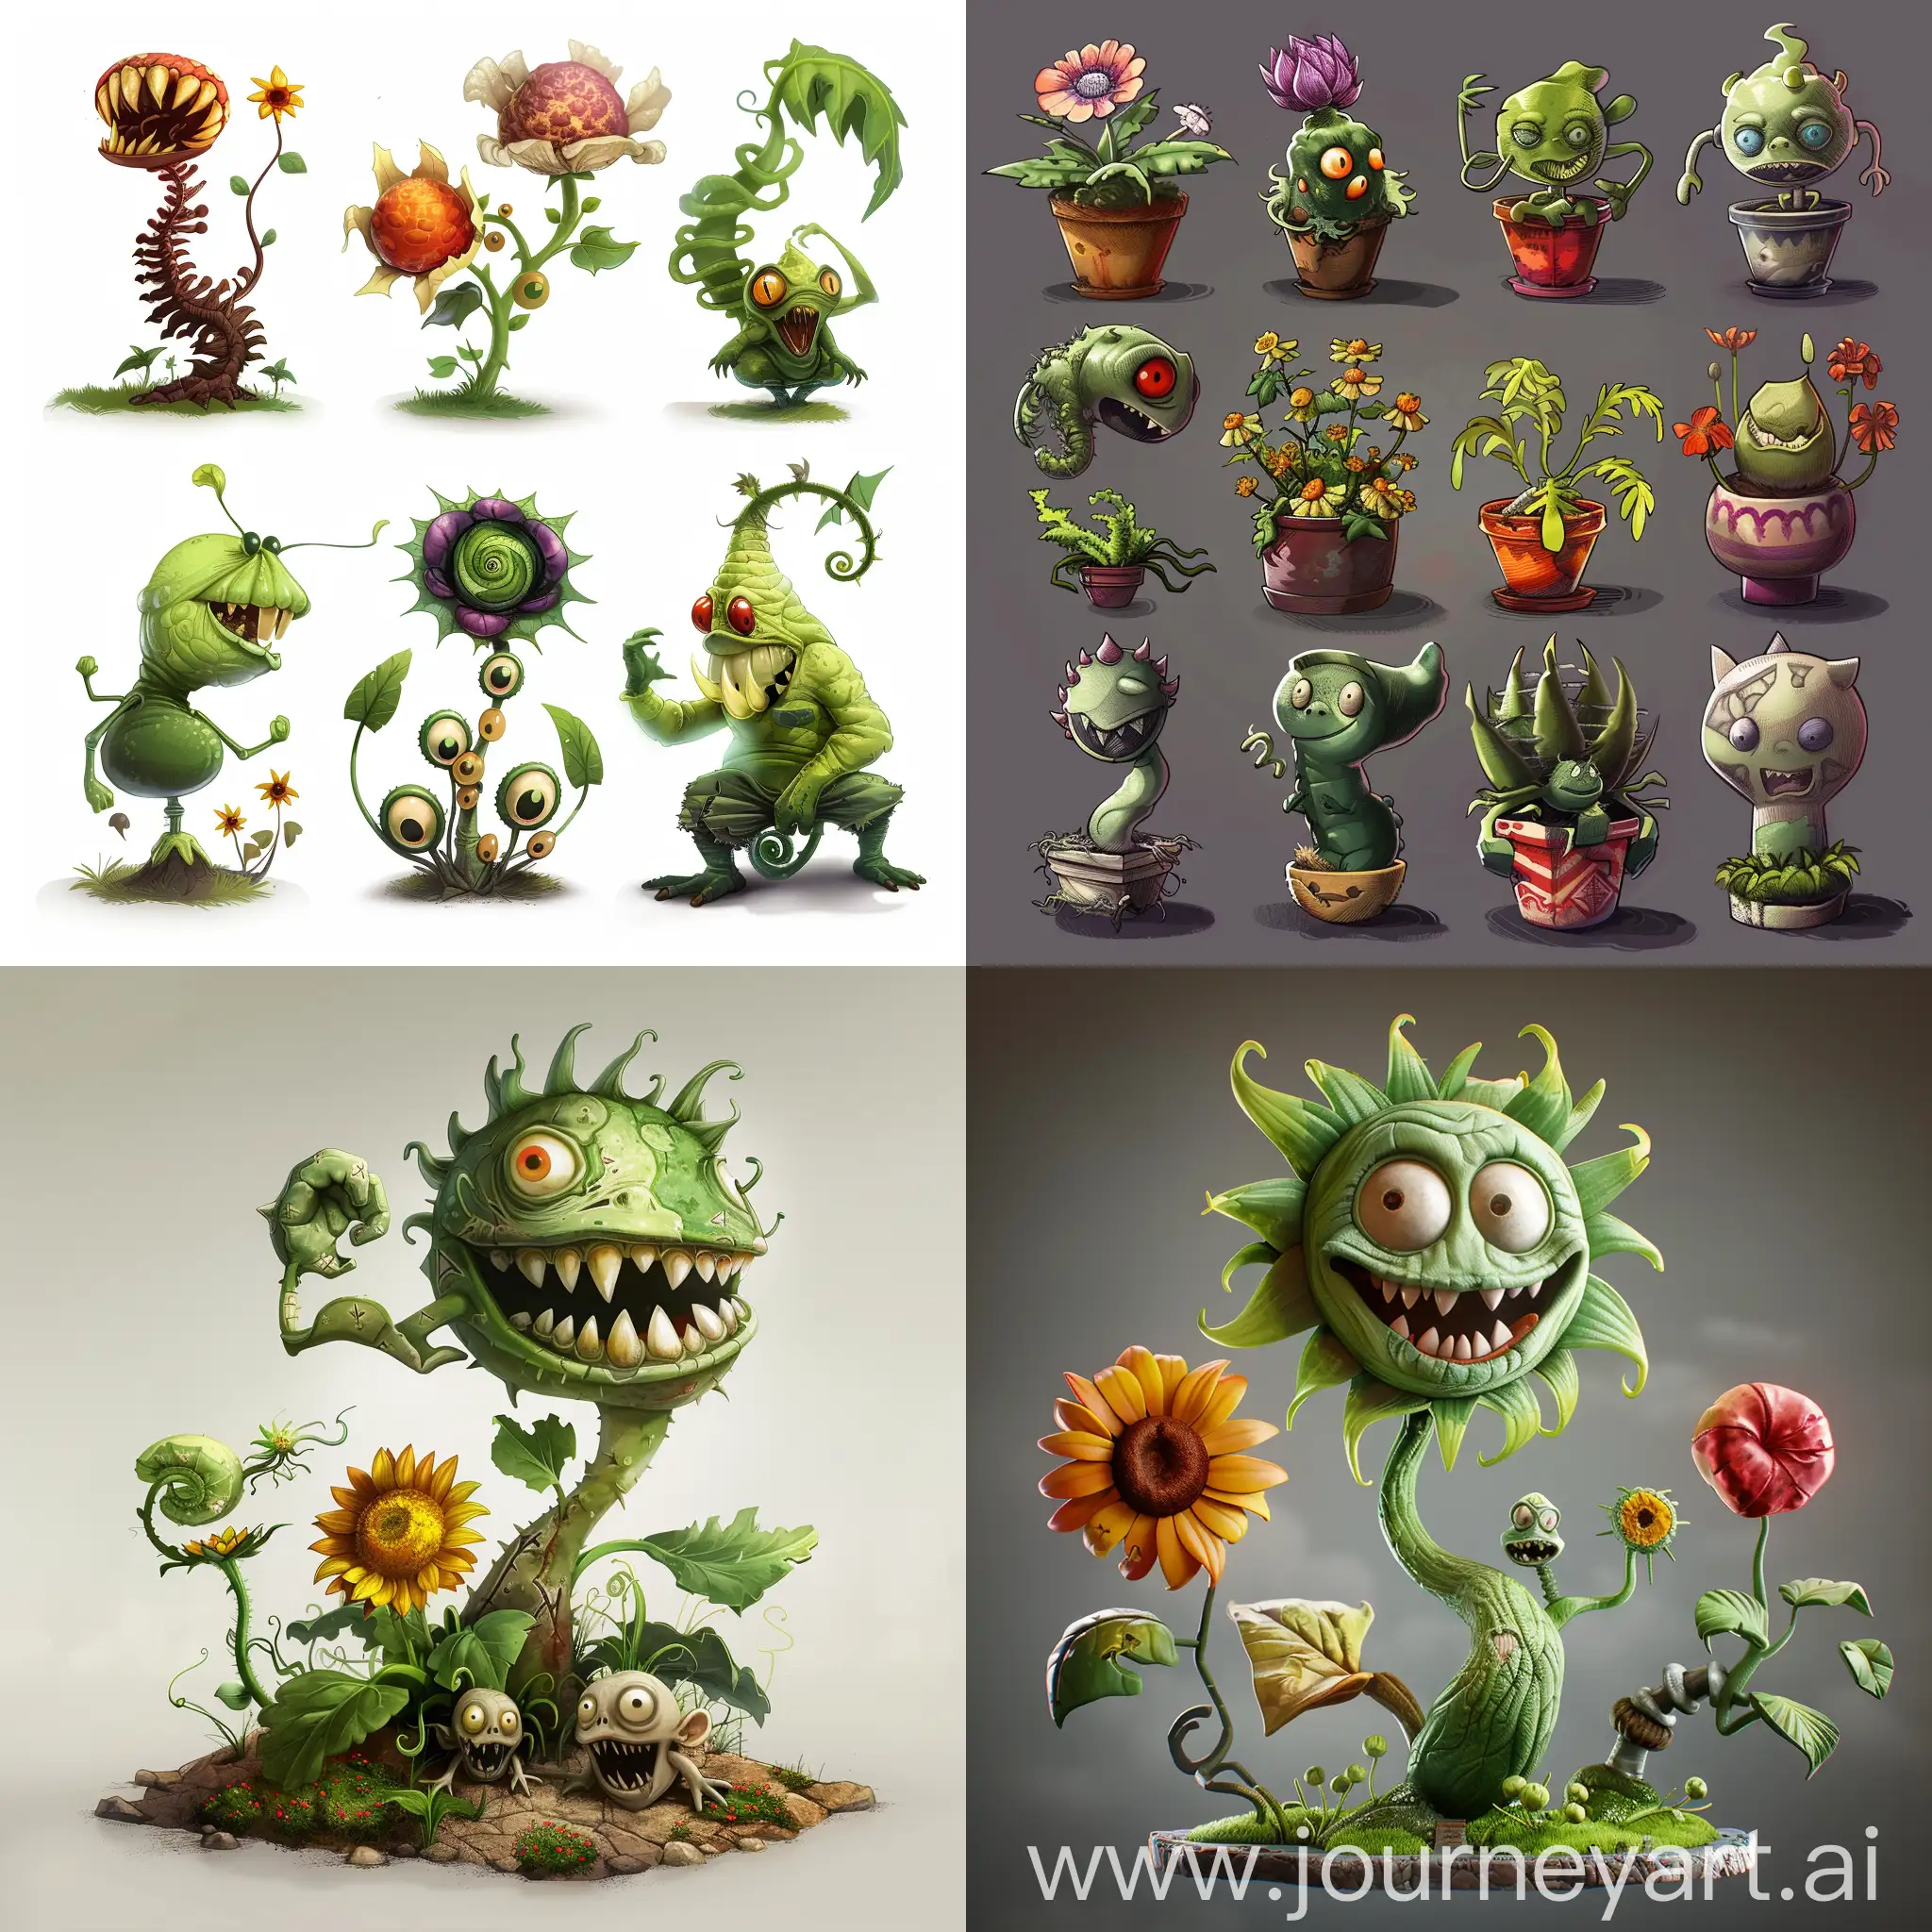 Plants-vs-Zombies-Hybrid-Scene-with-Various-Plants